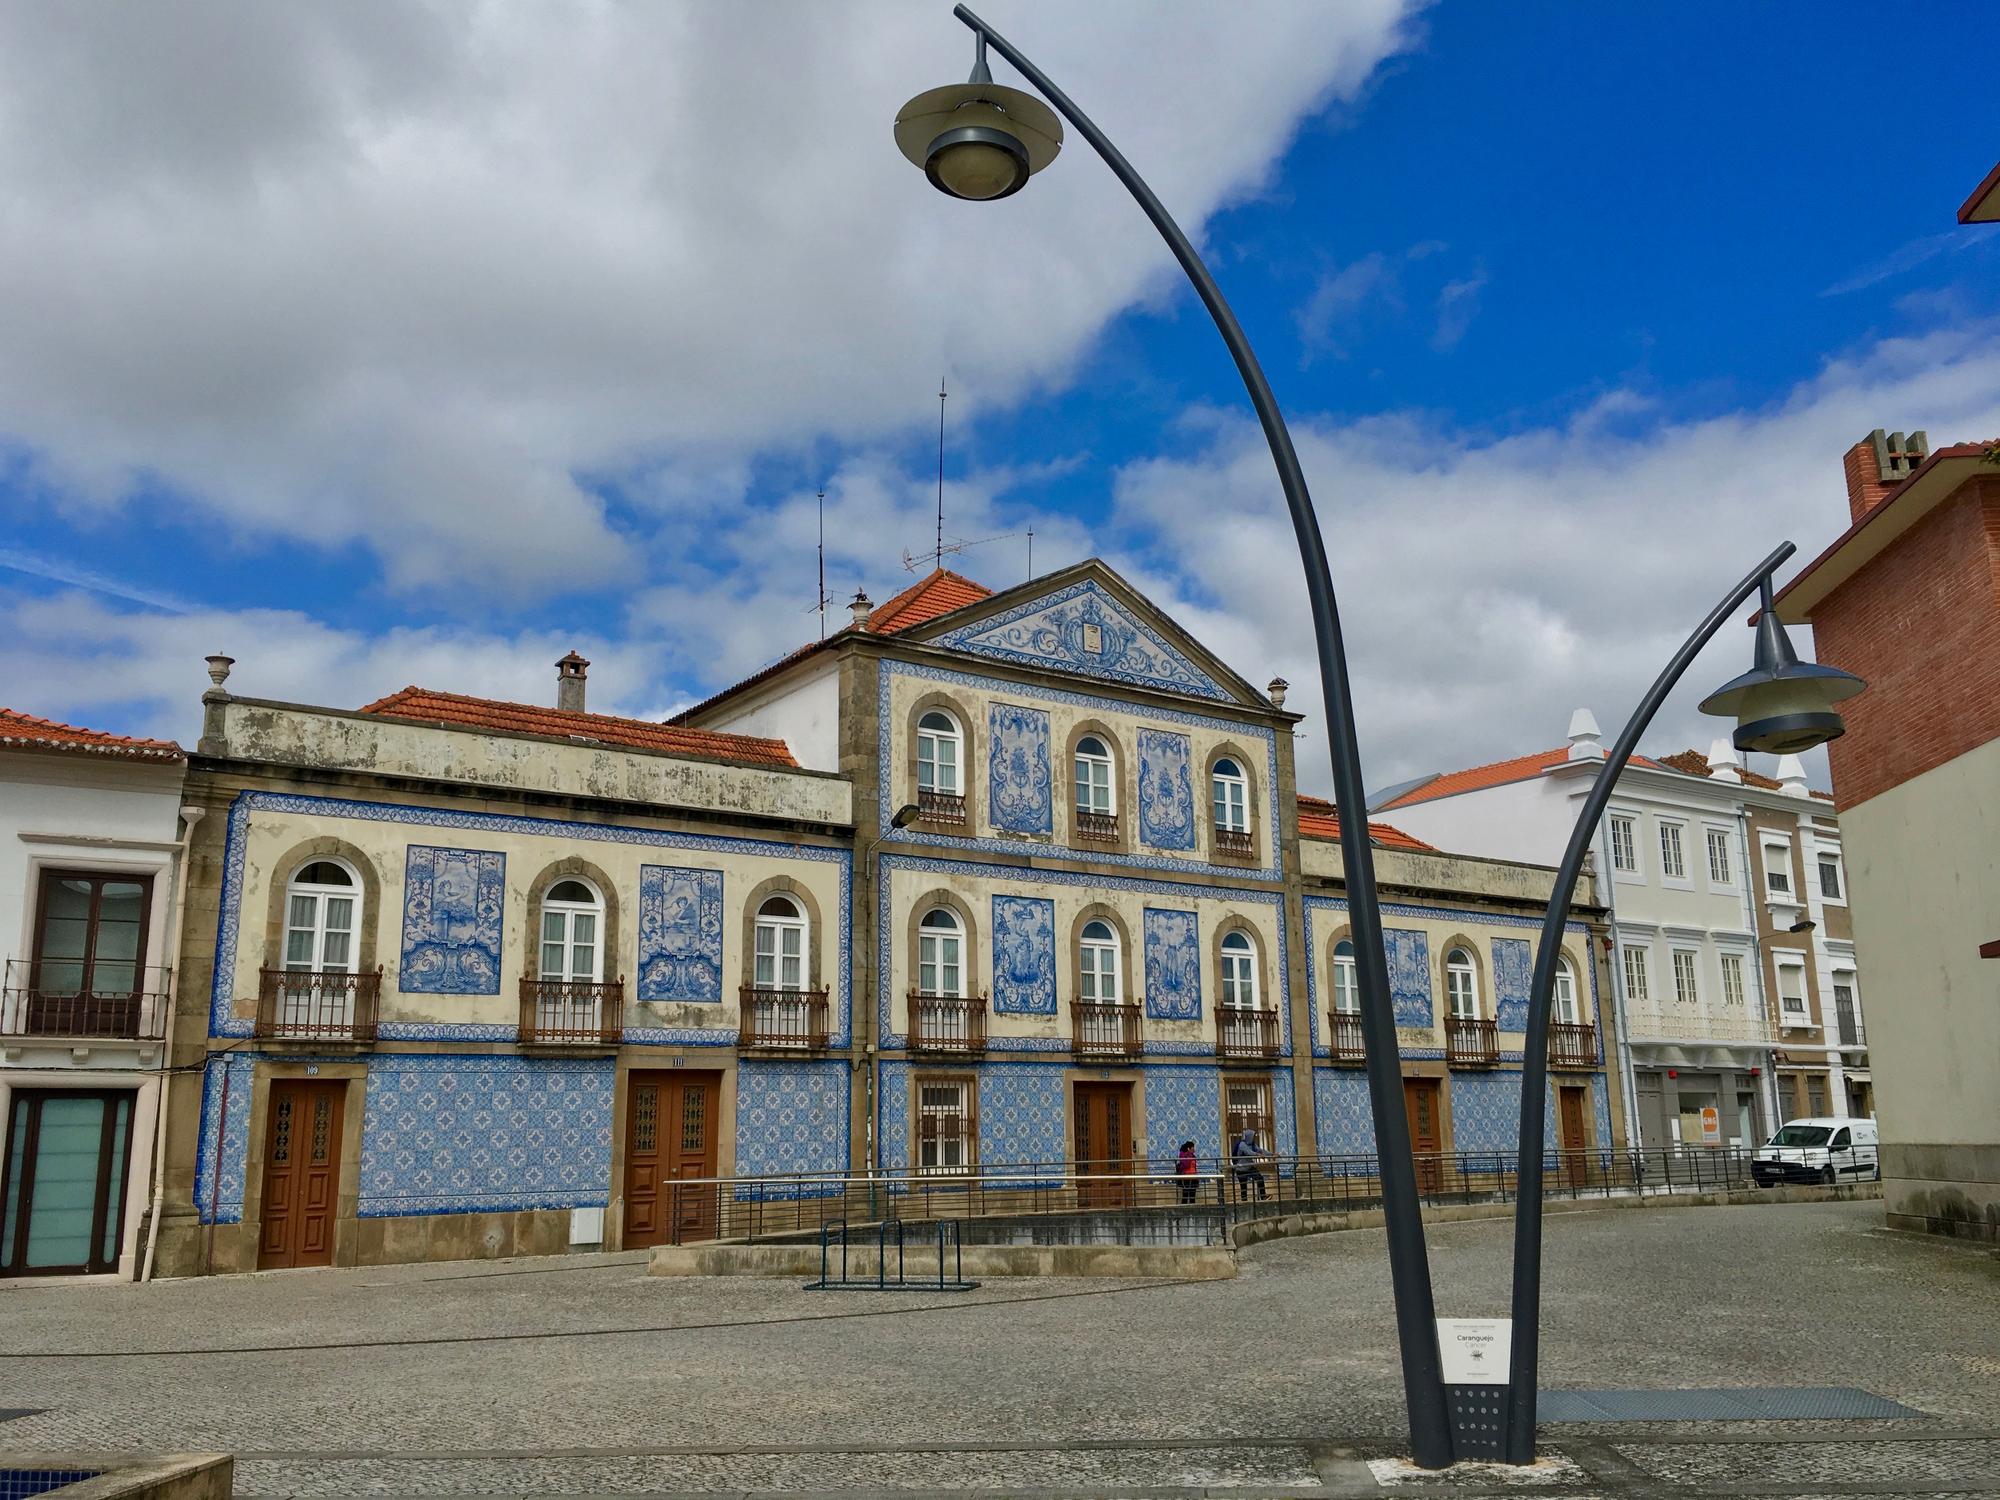 🇵🇹 Aveiro, Portugal, May 2019.